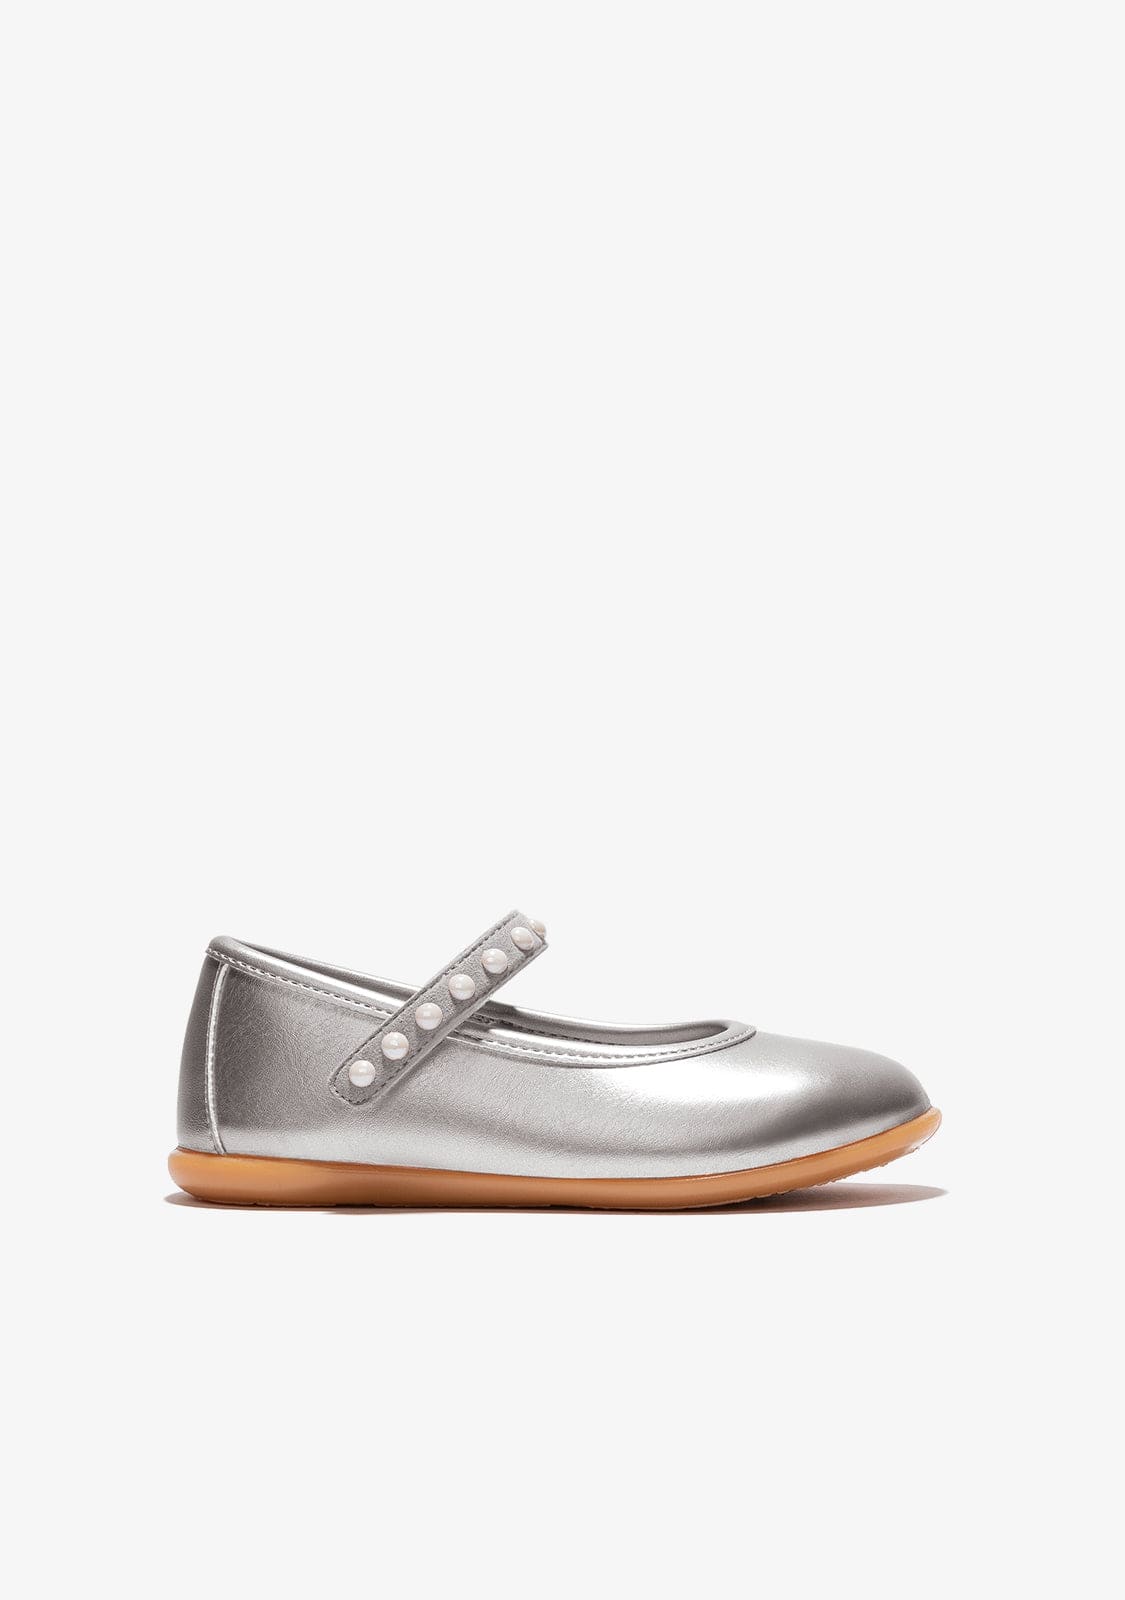 CONGUITOS Shoes Girl's Silver Pearls Ballerinas Metallized